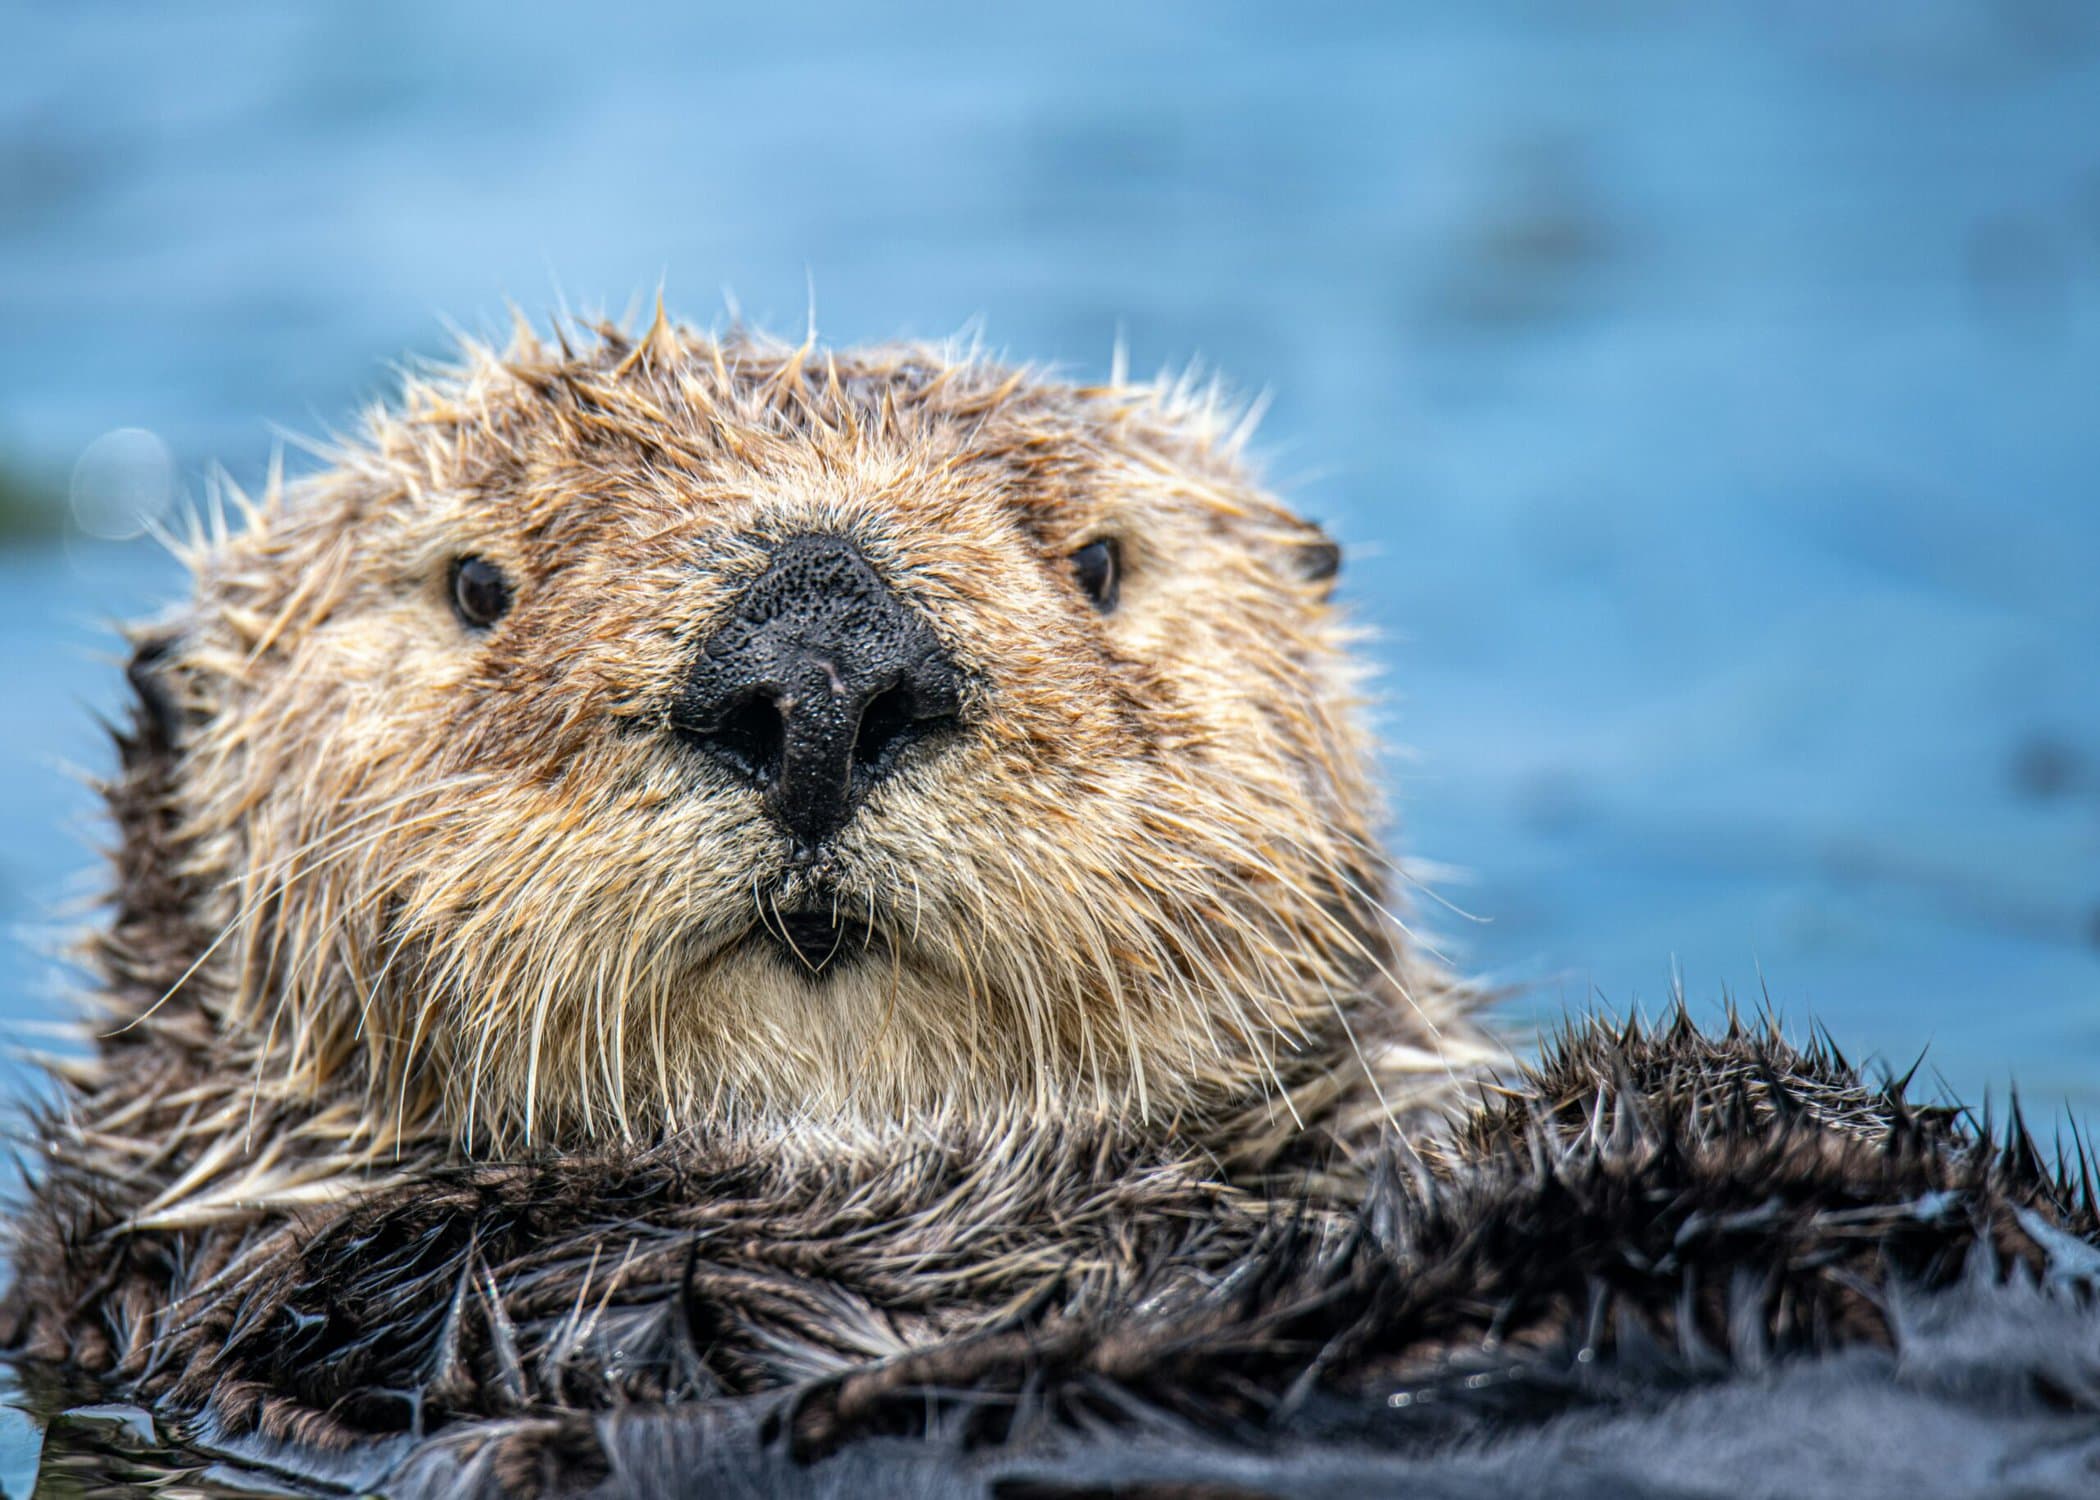 Decorative image of a sea otter's face